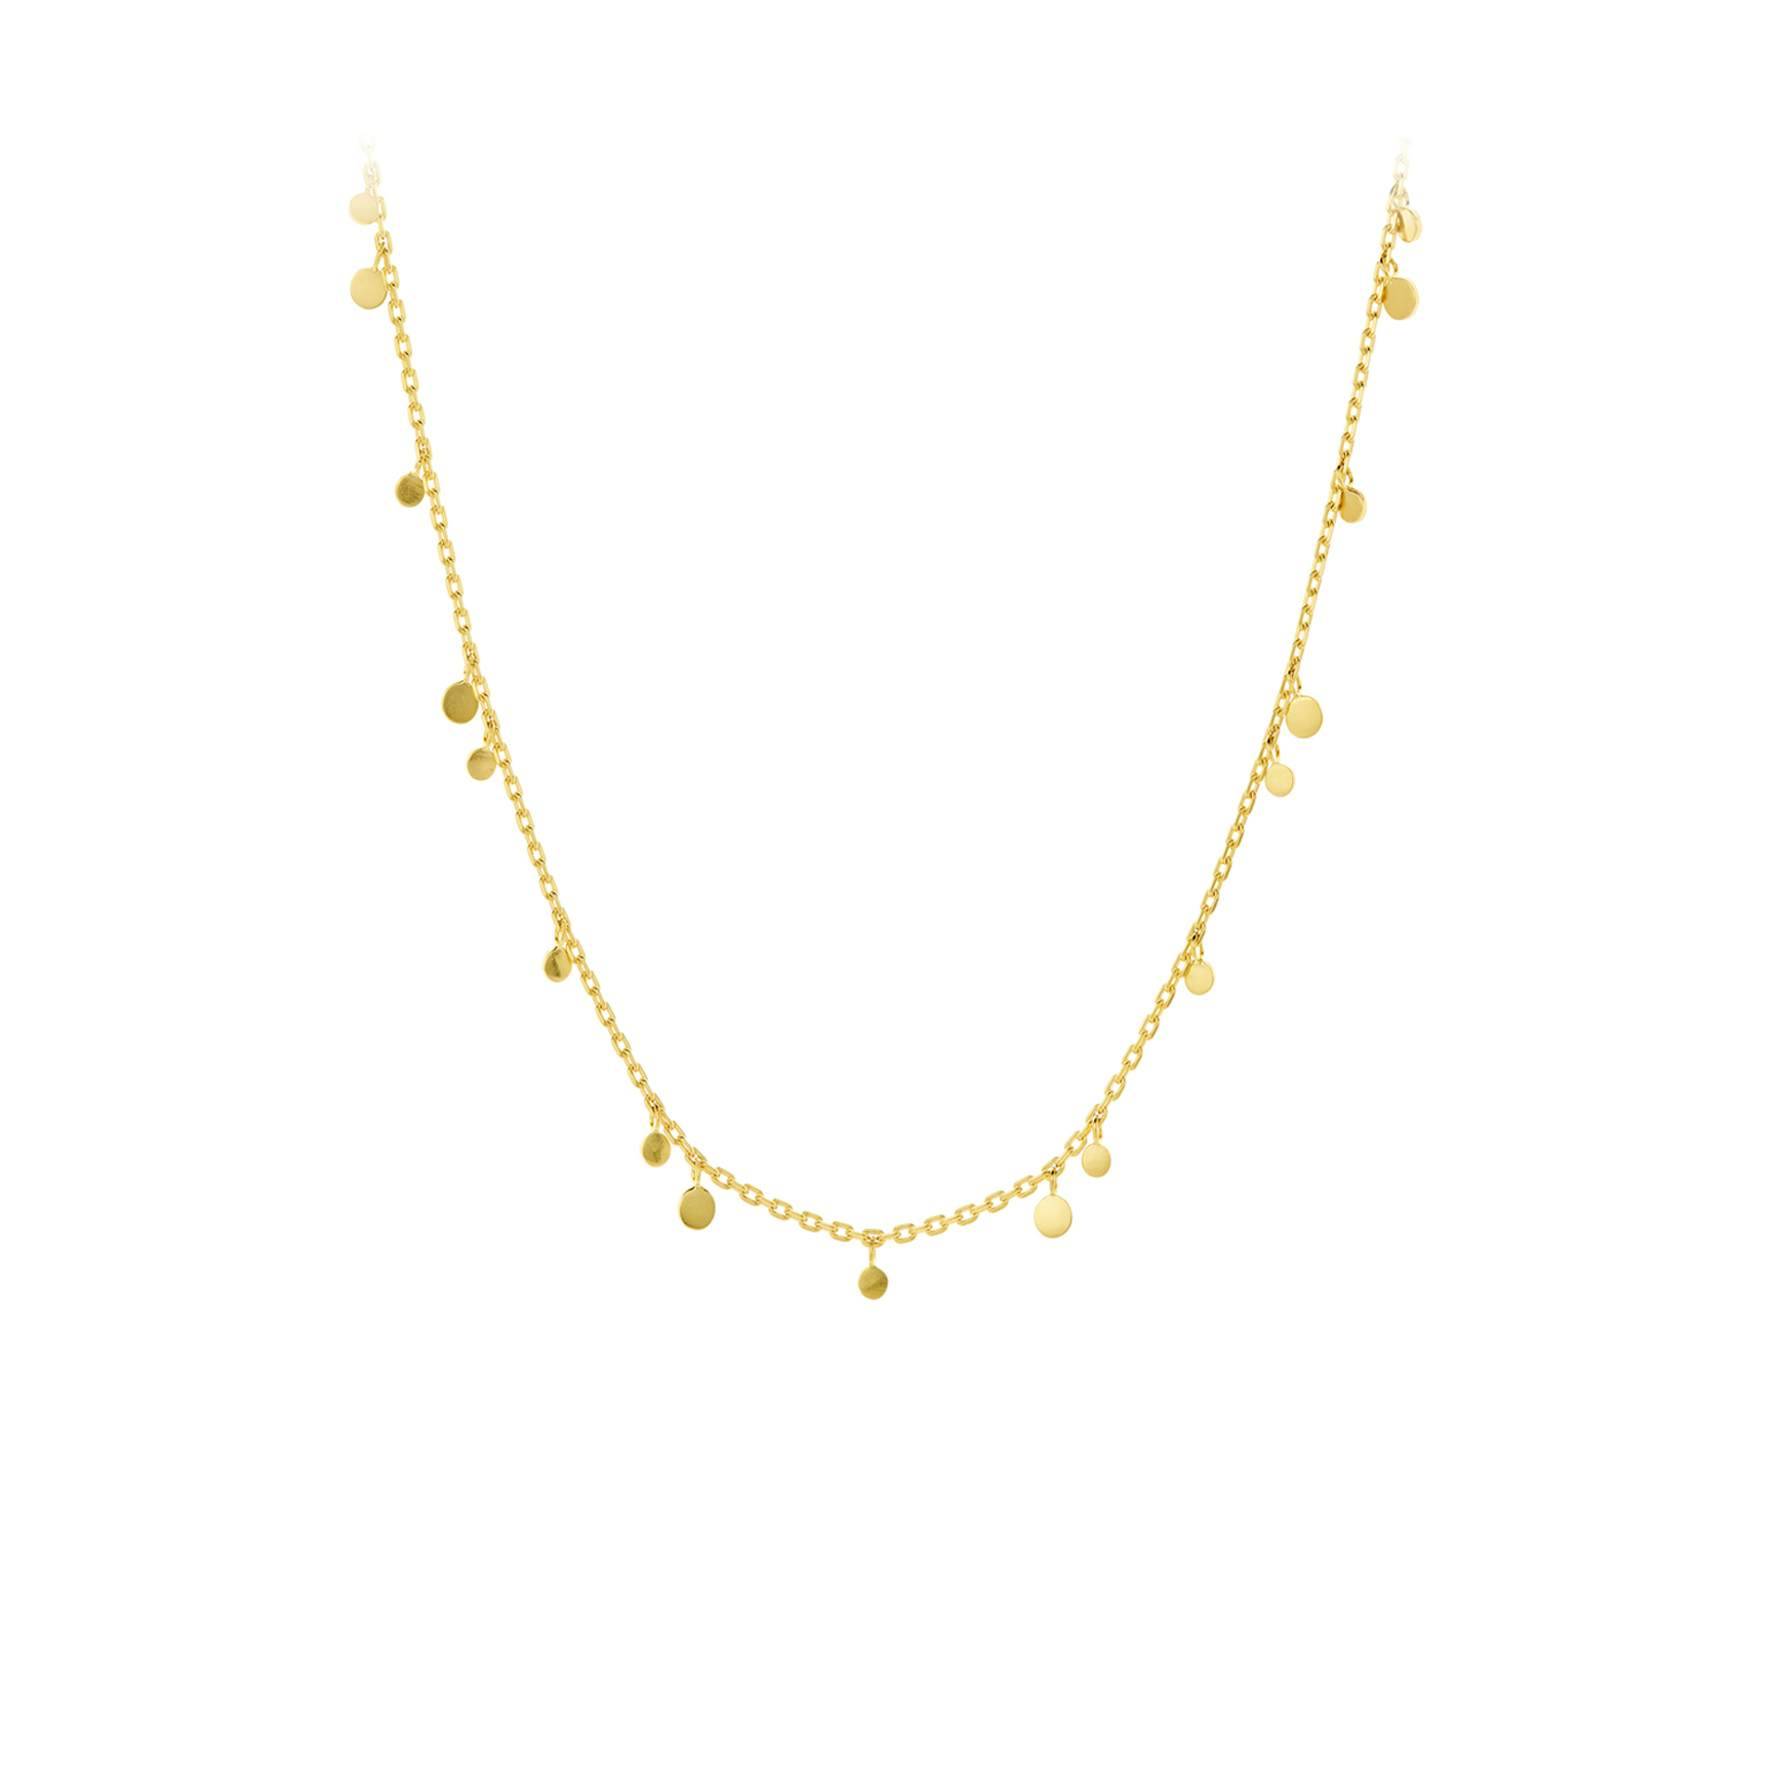 Glow Necklace von Pernille Corydon in Vergoldet-Silber Sterling 925